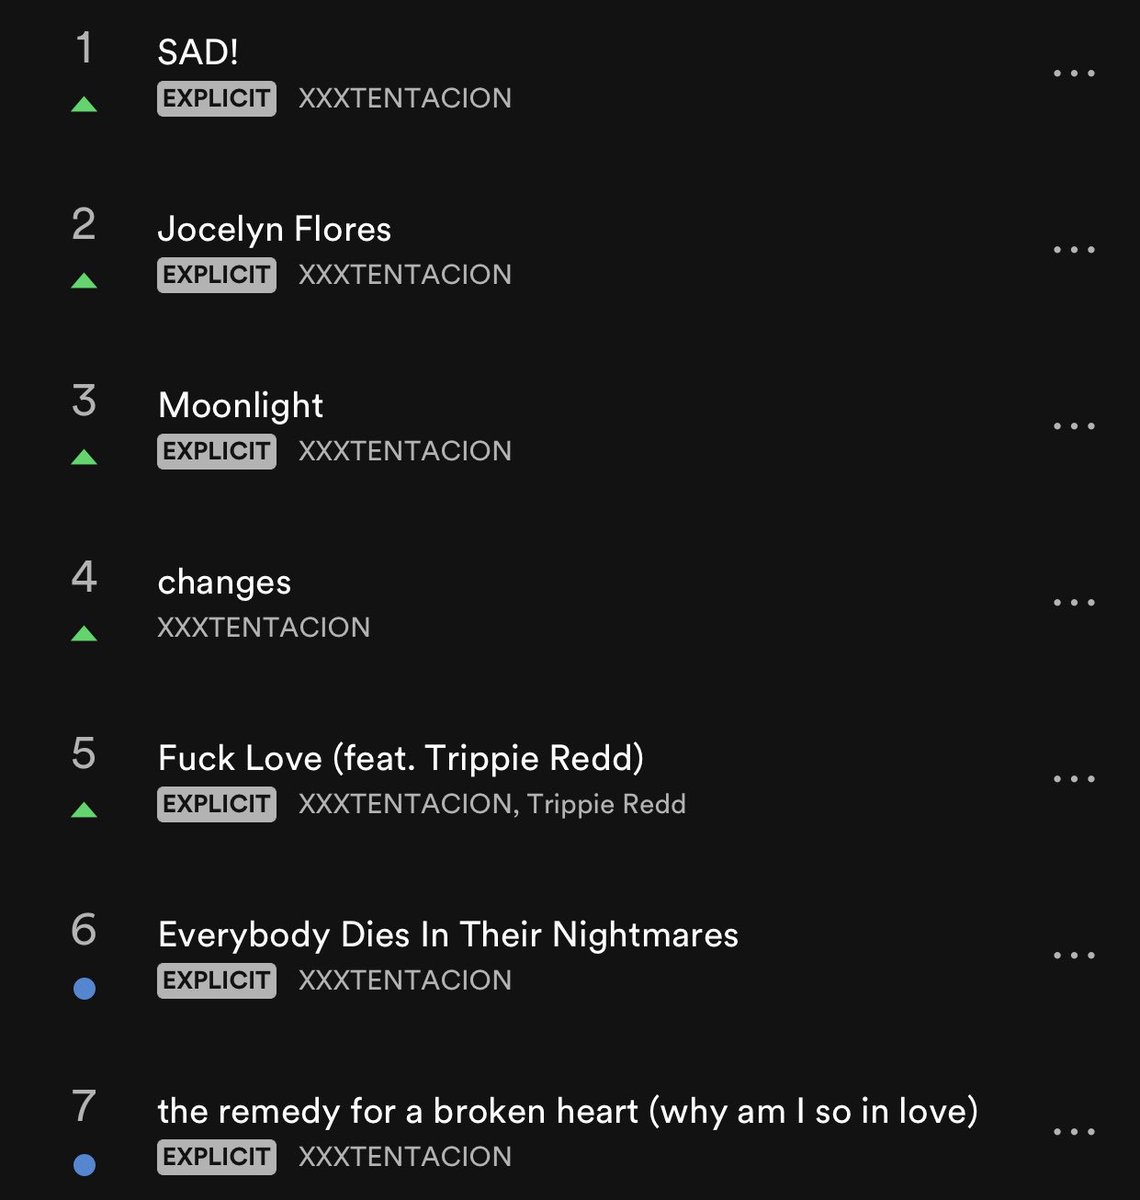 Spotify Global Top 50 Chart